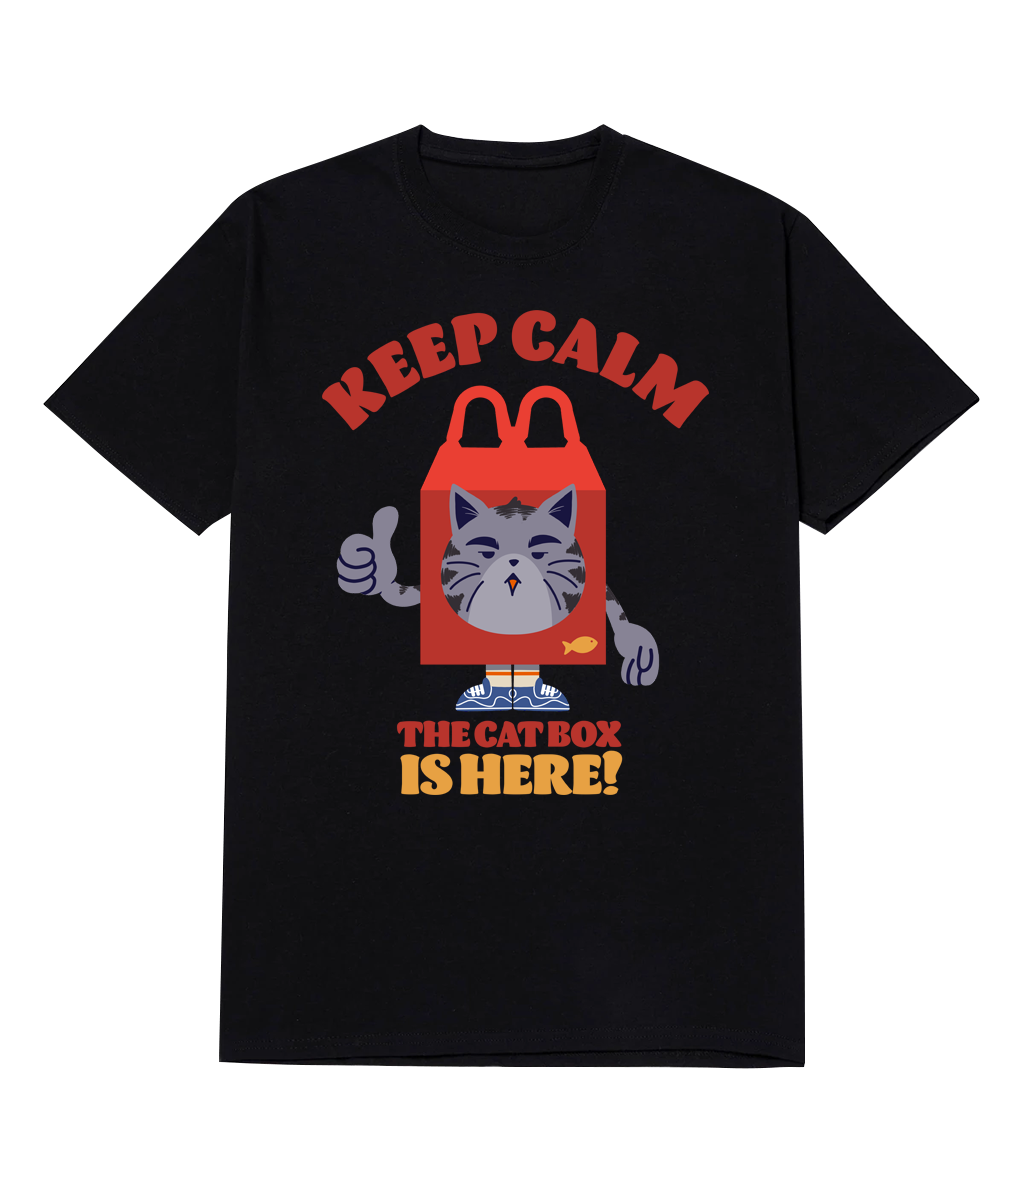 Polera - Keep calm, the cat box is here!